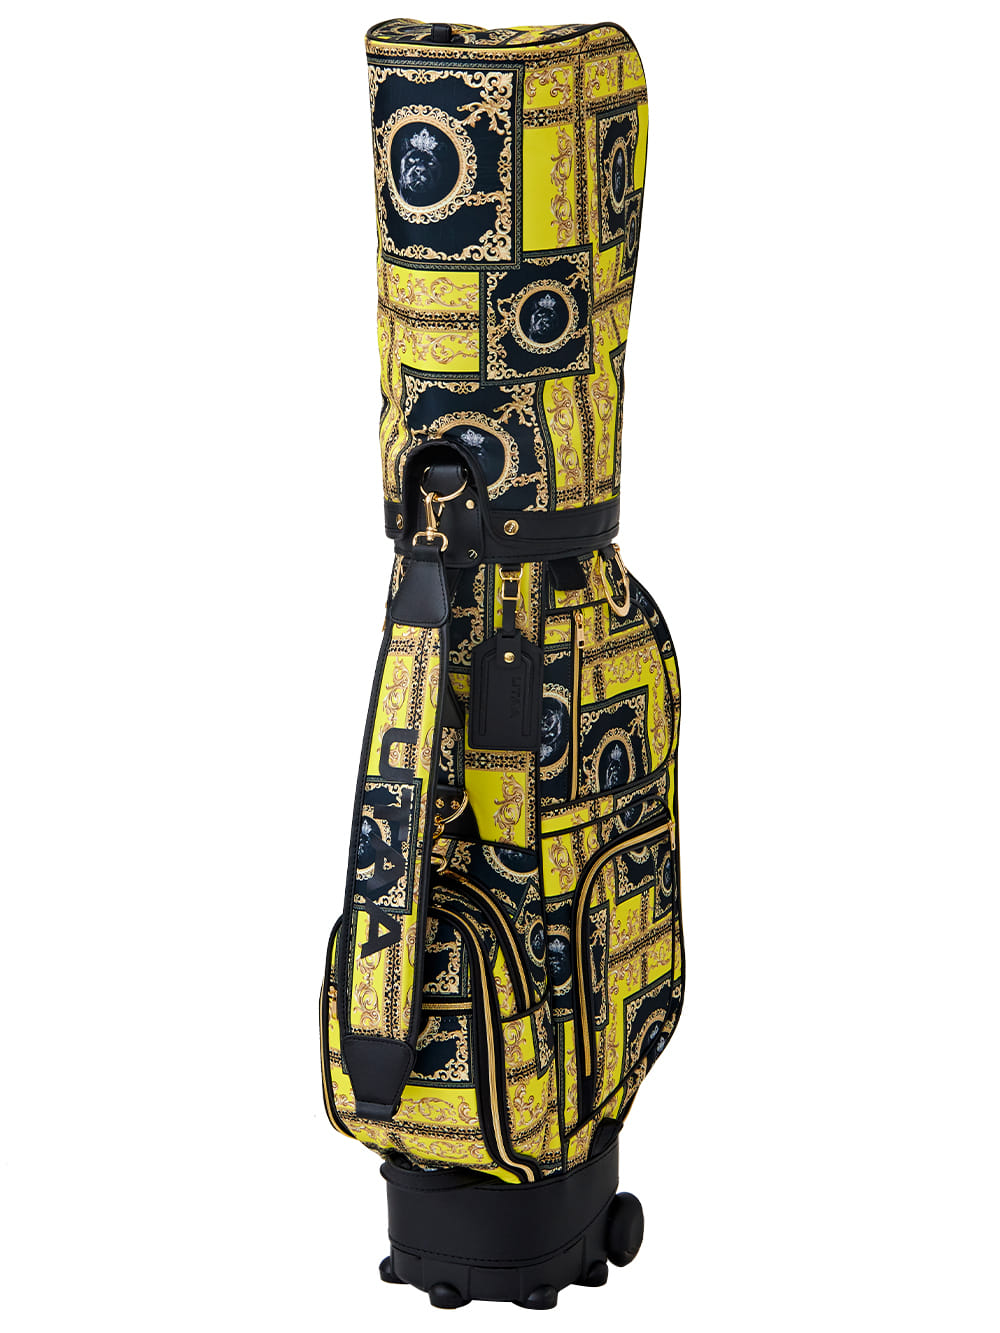 UTAA Dazzle Baroque Caddie Bag : Yellow (UB0GDF300YE)